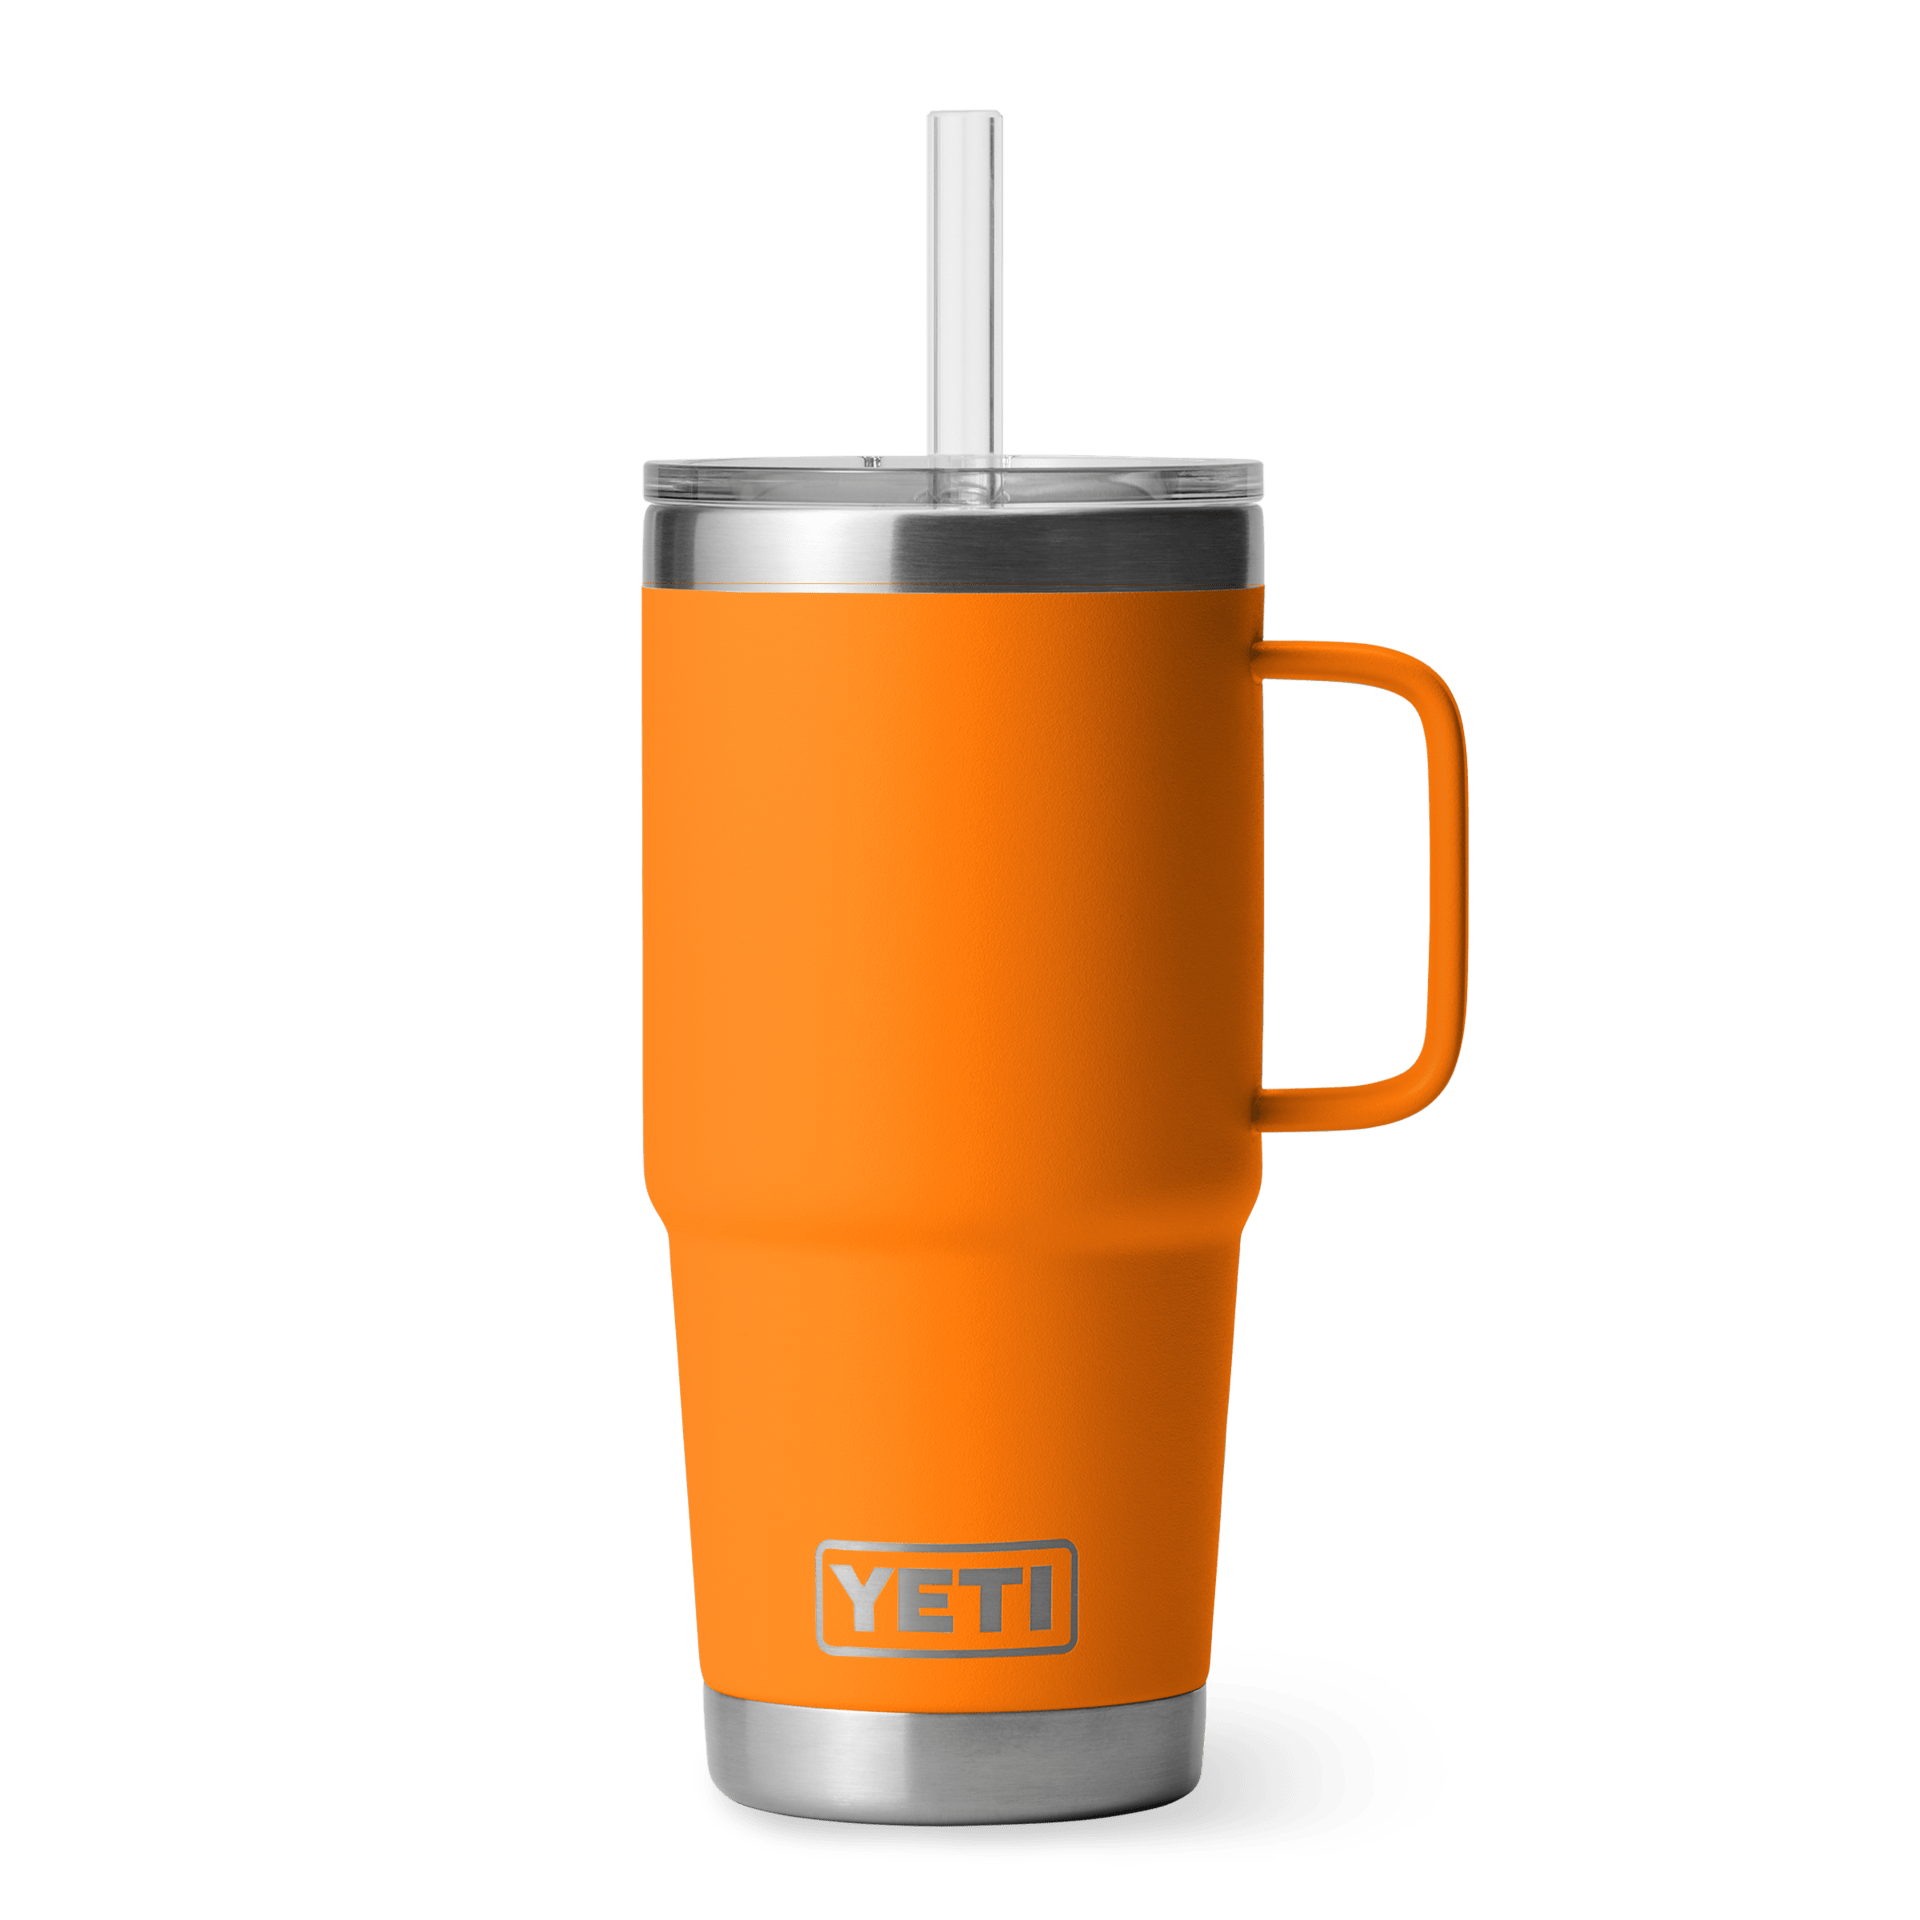 YETI Insulated Drinkware YETI Rambler 25 oz Mug with Straw Lid - King Crab Orange